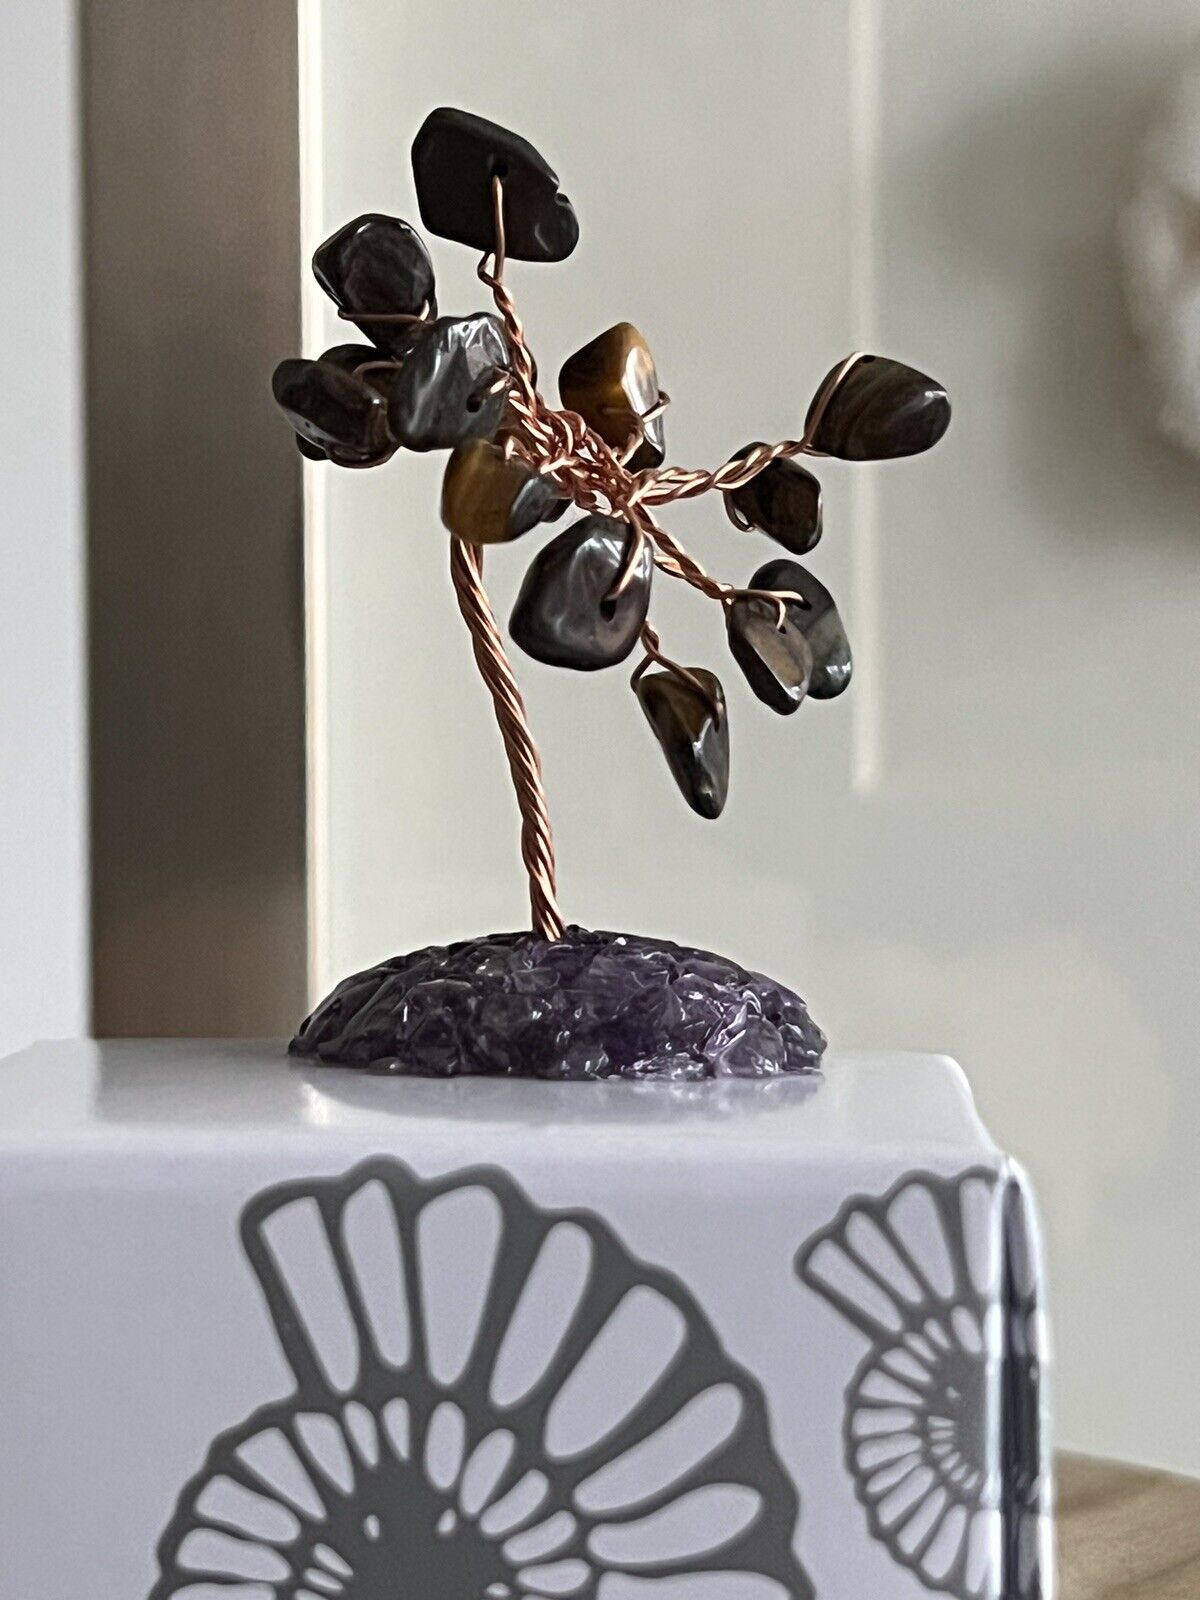 Mini Gemstone Trees - Enchanting Variations for Prosperity, Healing, and Balance - Everyday Rocks